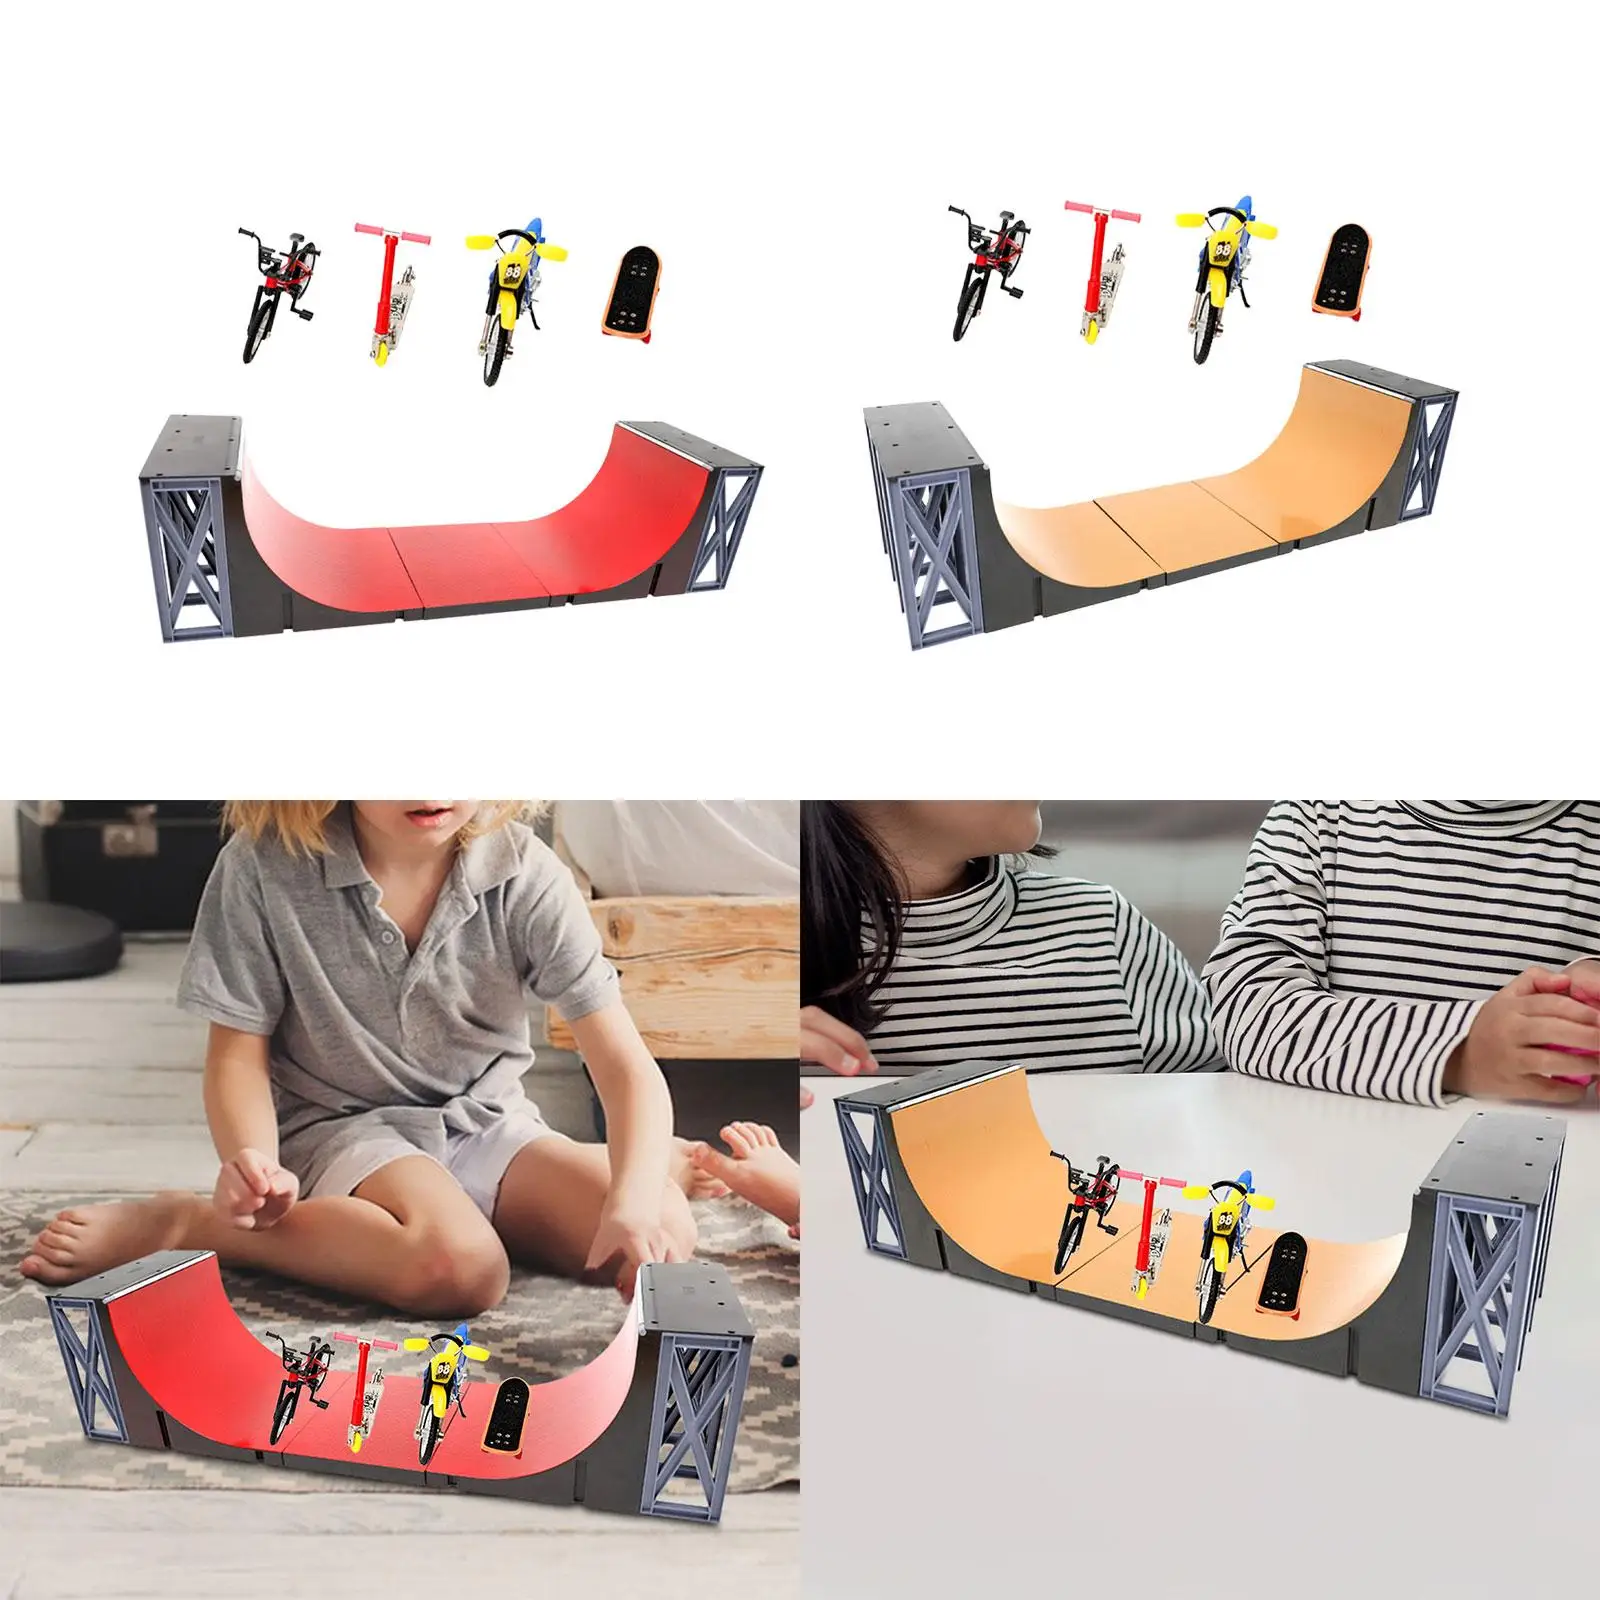 5x Fingerboard Ramp Finger Set Fingerboard Skate Ramps for Girls Kids Adults